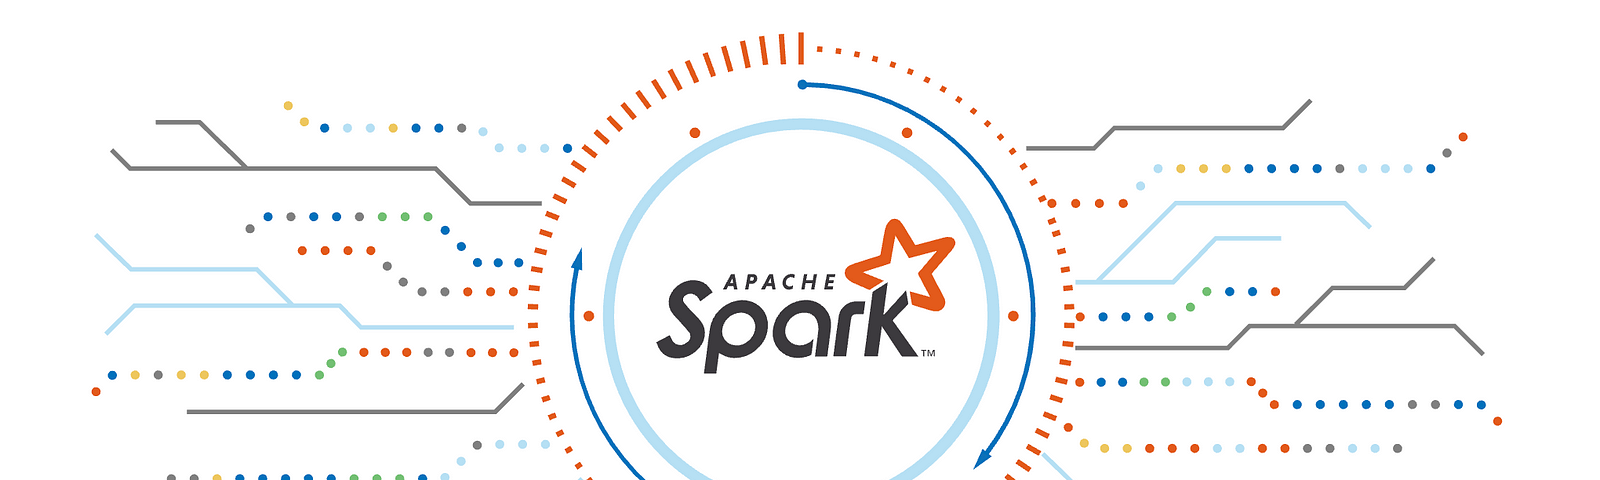 Apache Spark – Udemy Tech Blog – Medium